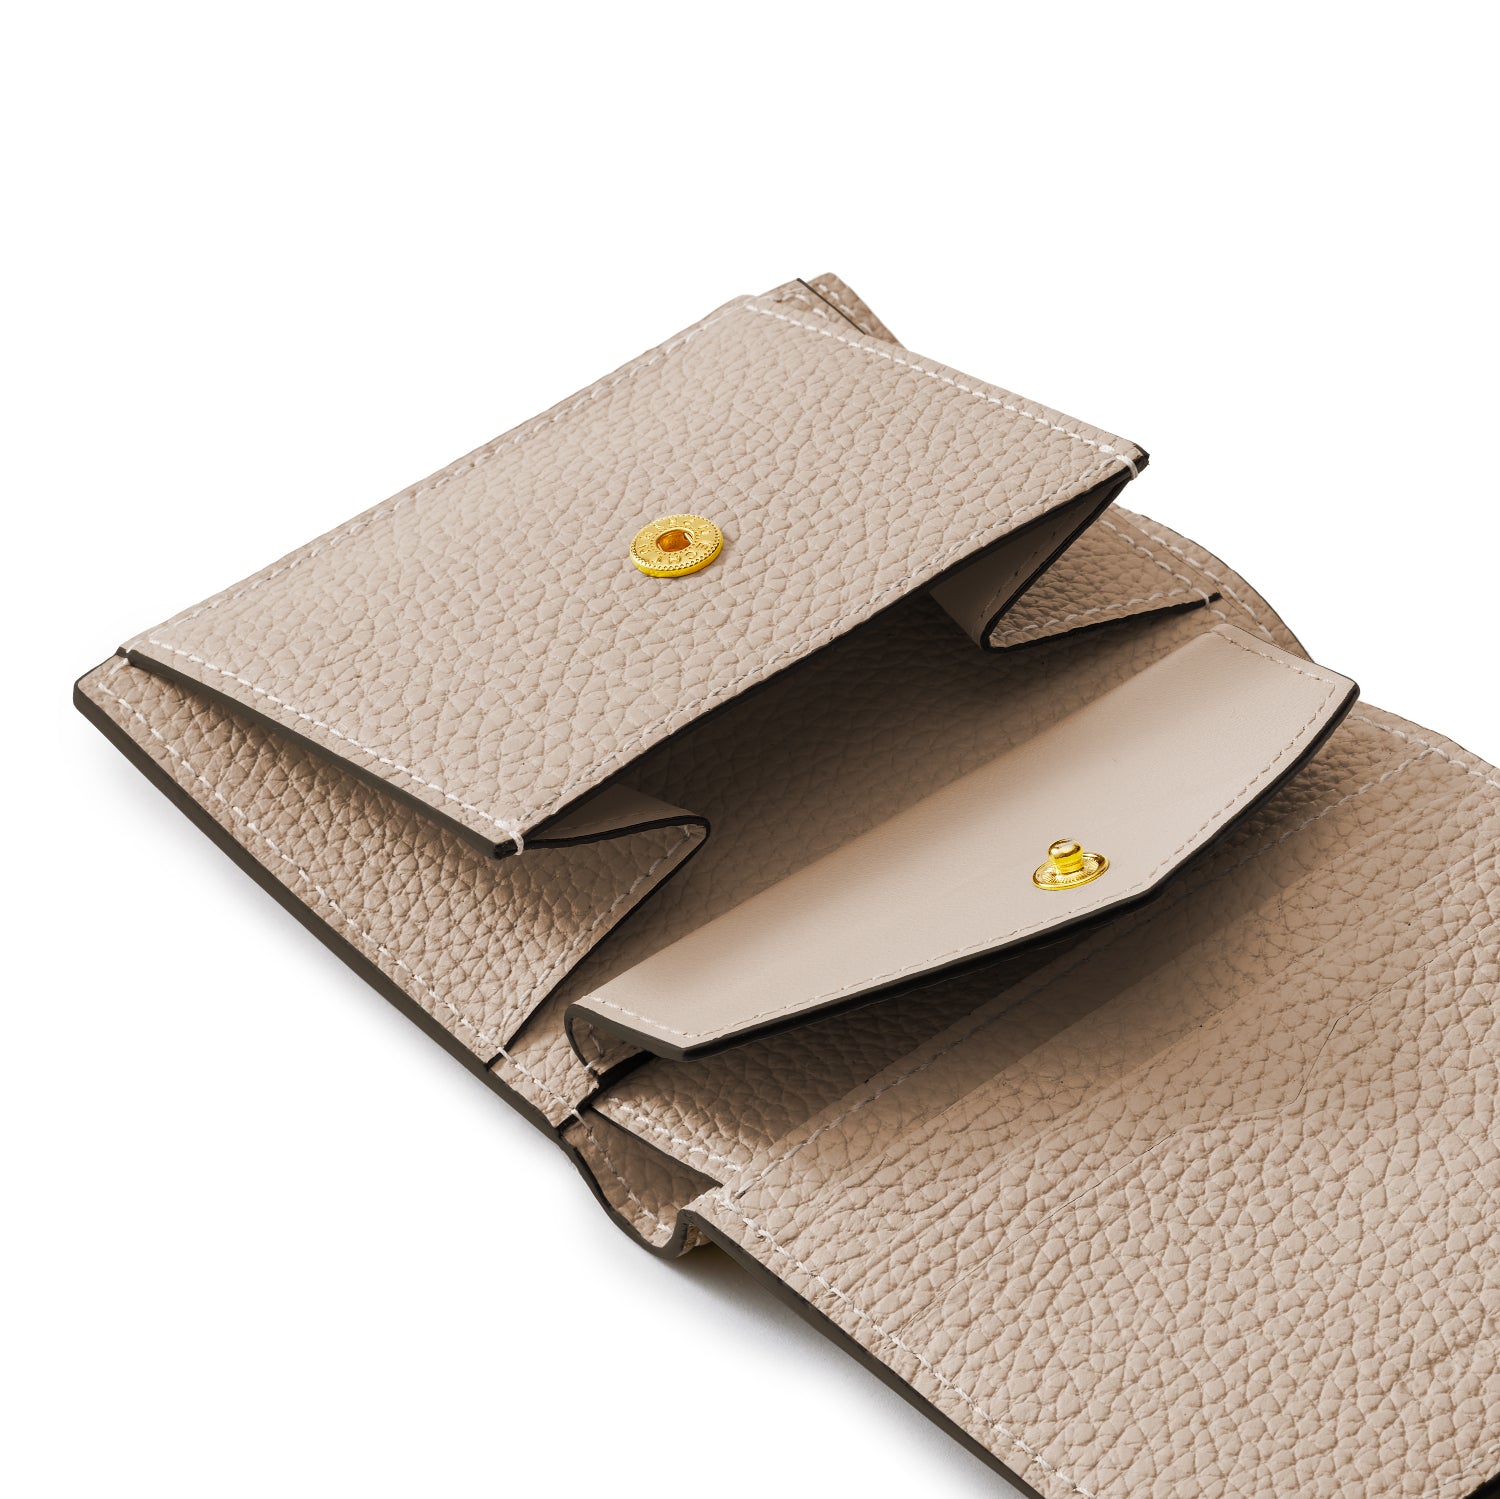 Belted bifold wallet in shrunken leather